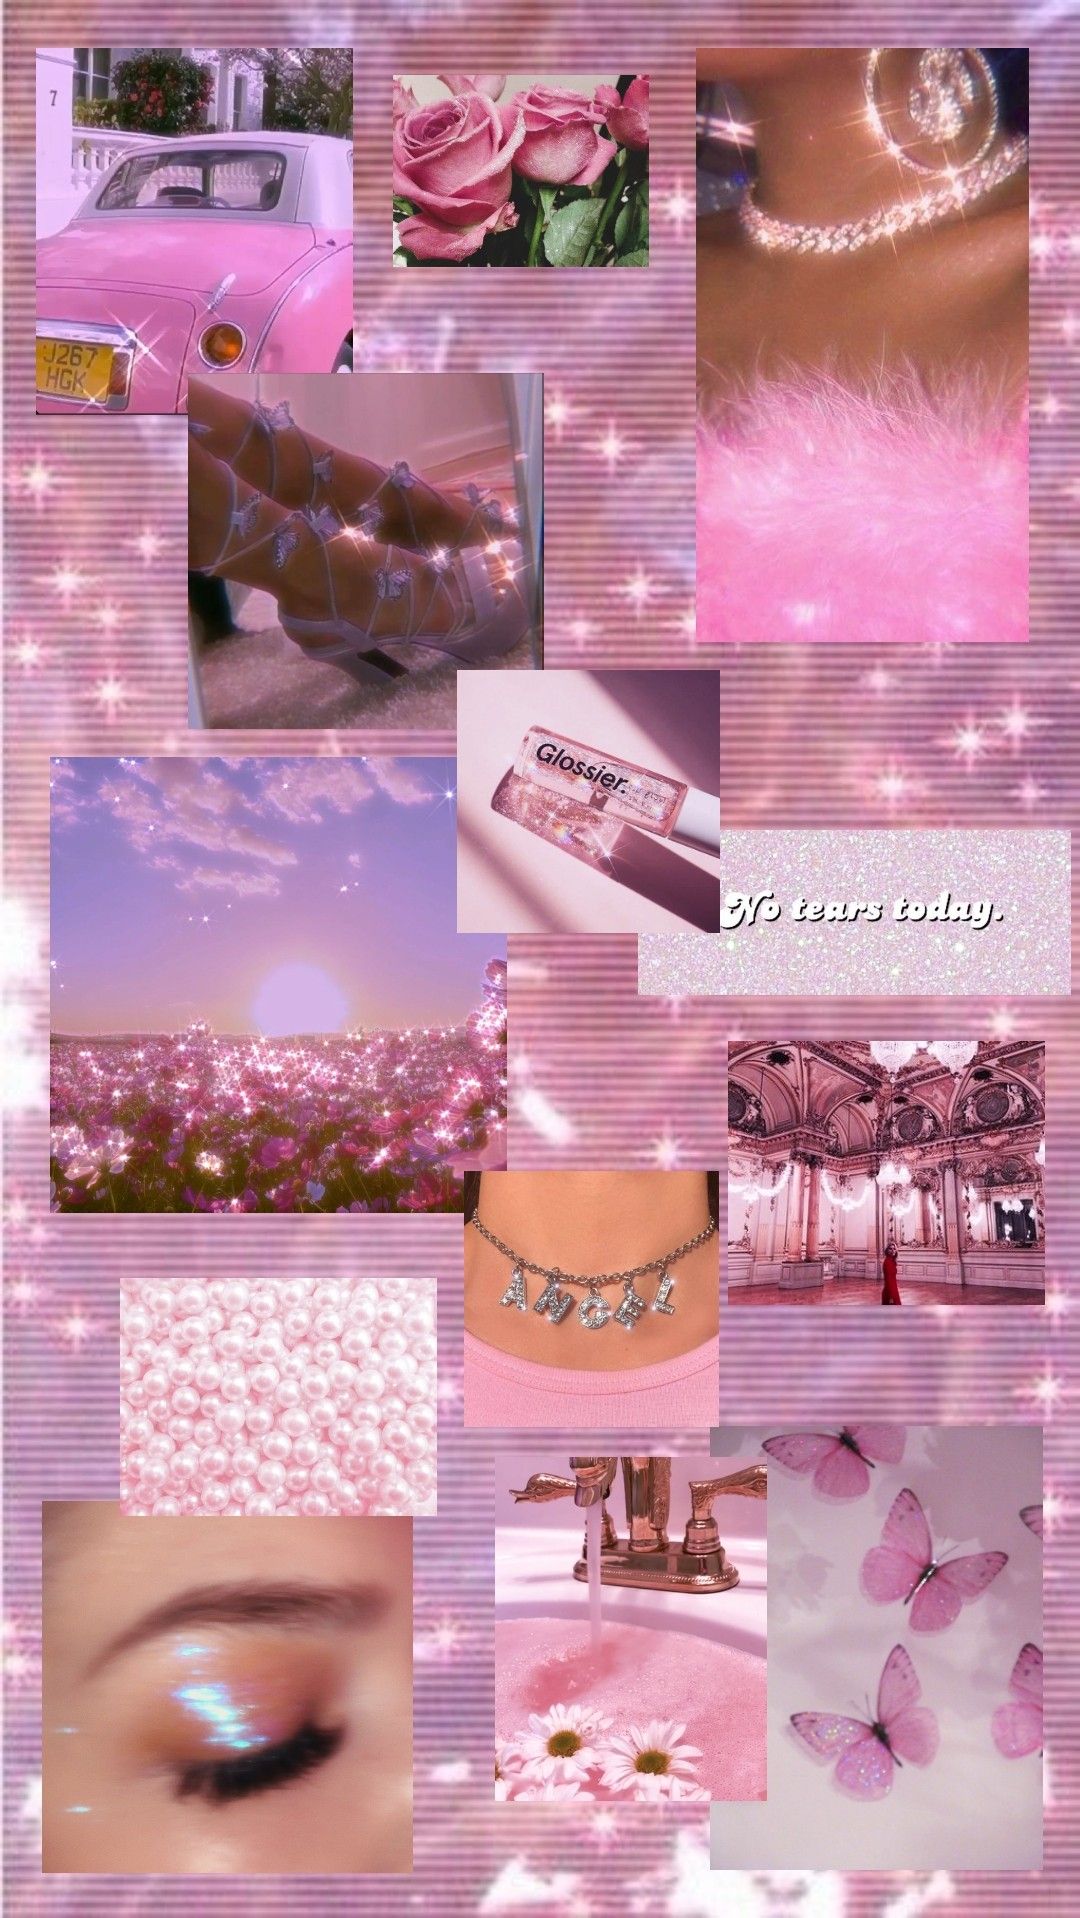 soft pink aesthetic wallpaper. iPhone wallpaper girly, Pink wallpaper iphone, Aesthetic iphone wallpaper